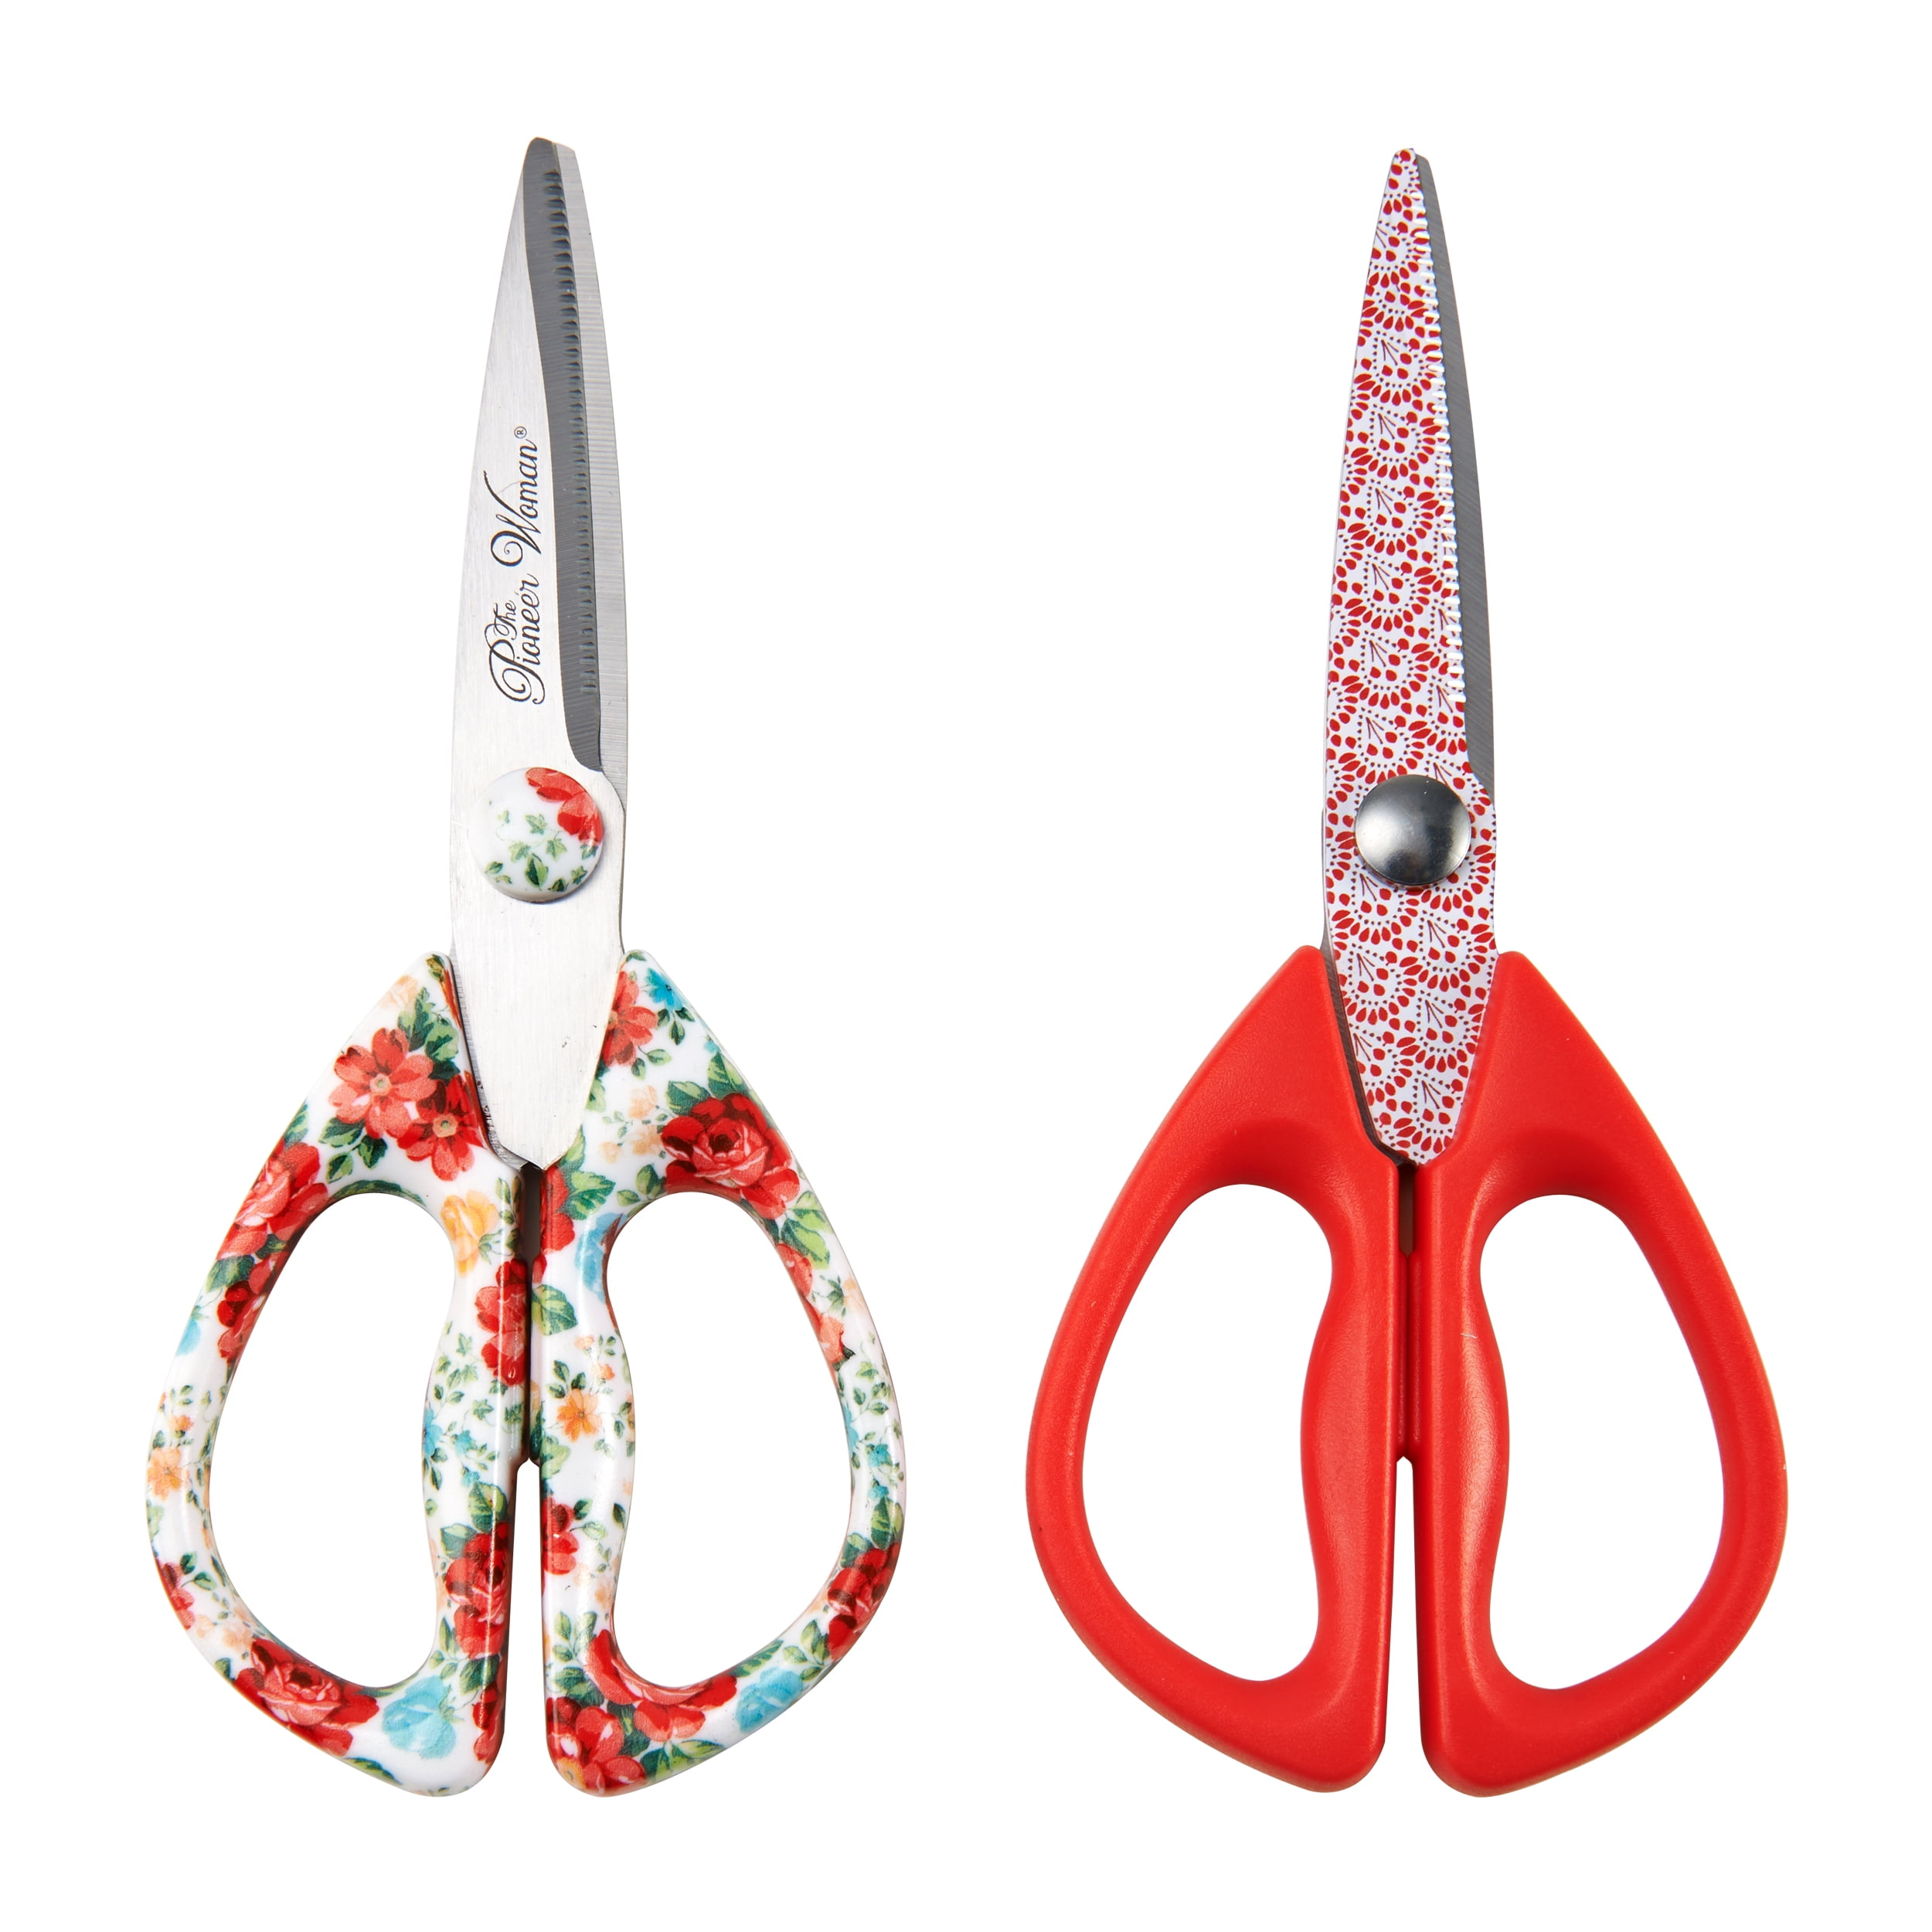 crazy scissors set